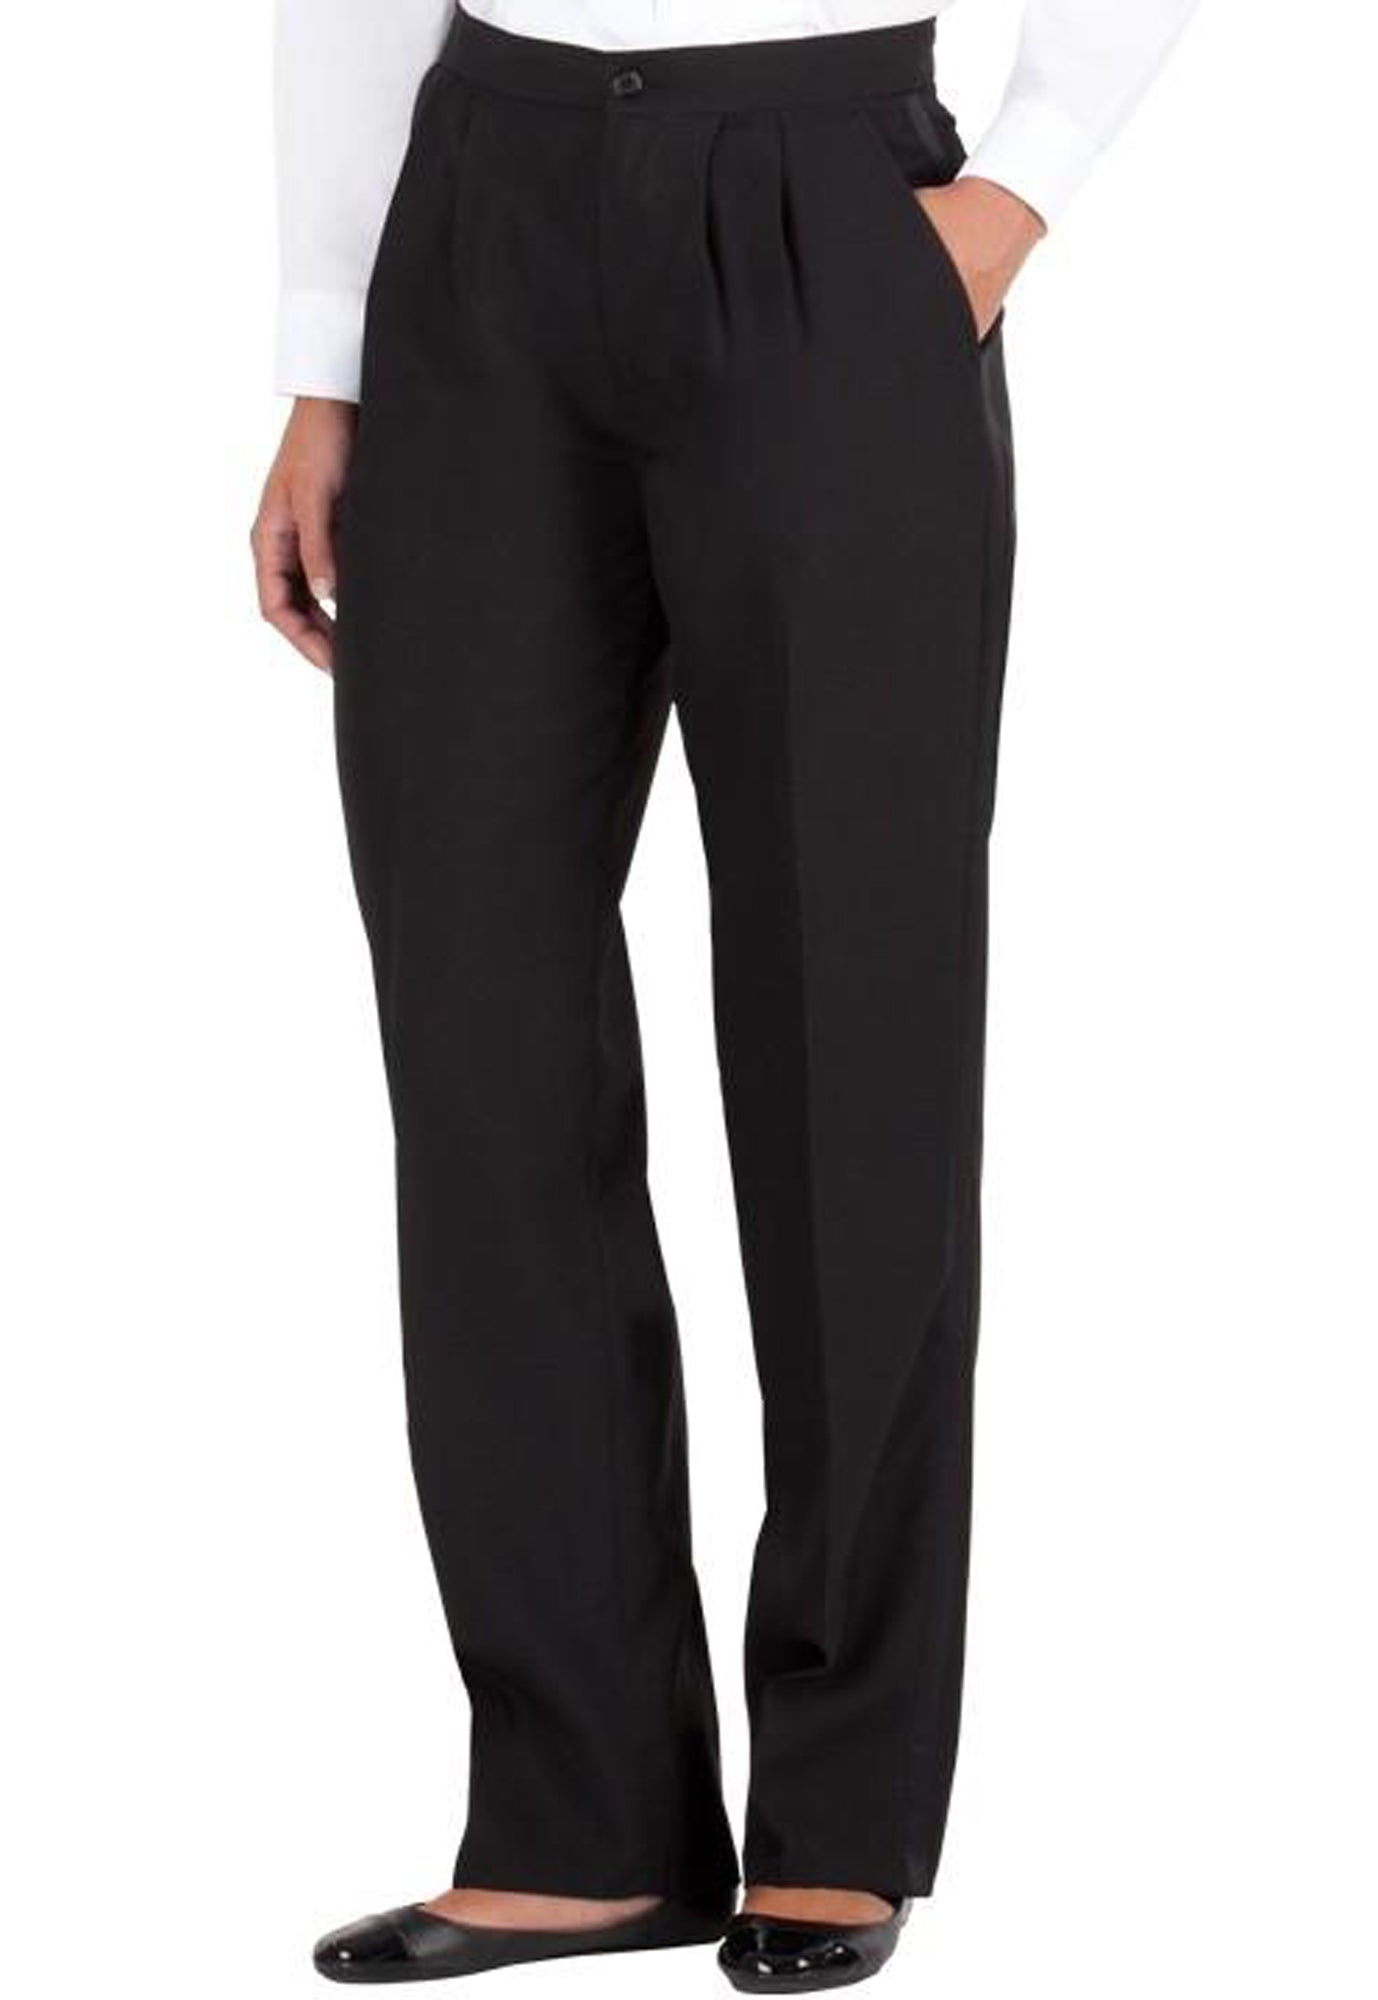 Henry Segal Women's Customizable Black Flat Front Low-Rise Dress Pants - 22